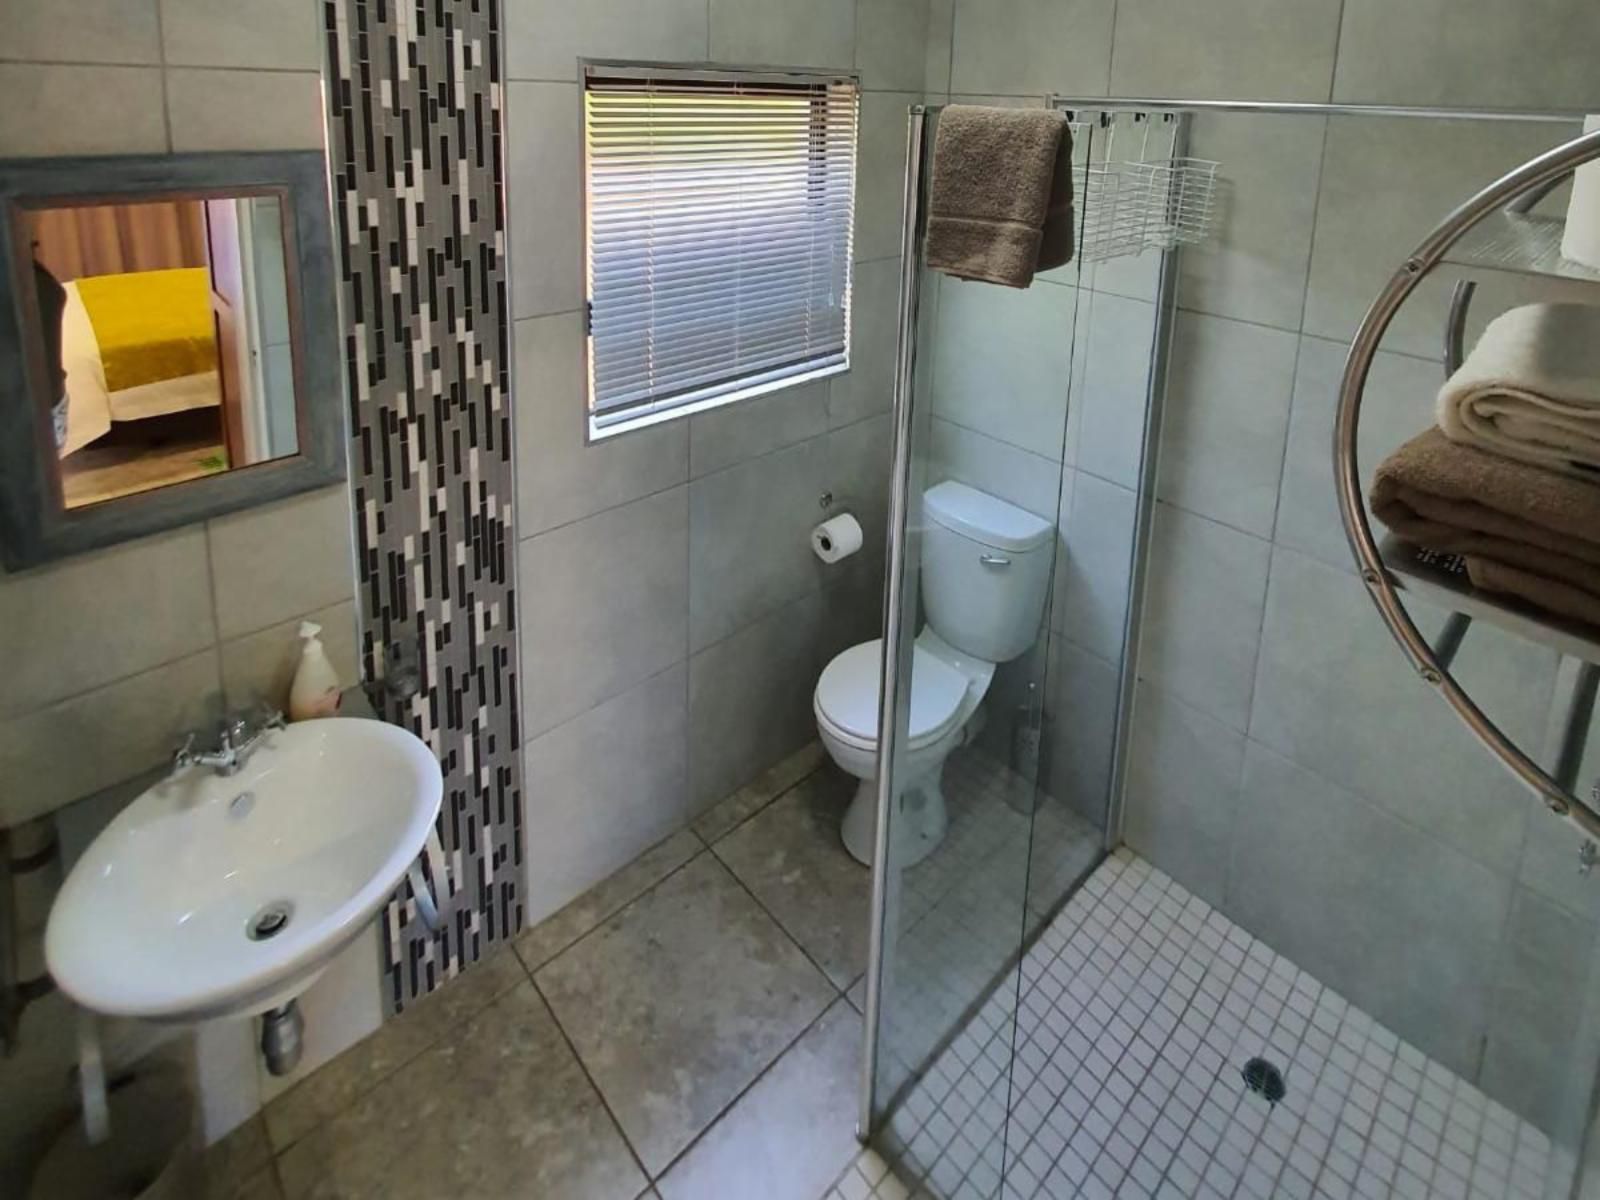 Huis Van Seisoene Wilkoppies Klerksdorp North West Province South Africa Unsaturated, Bathroom